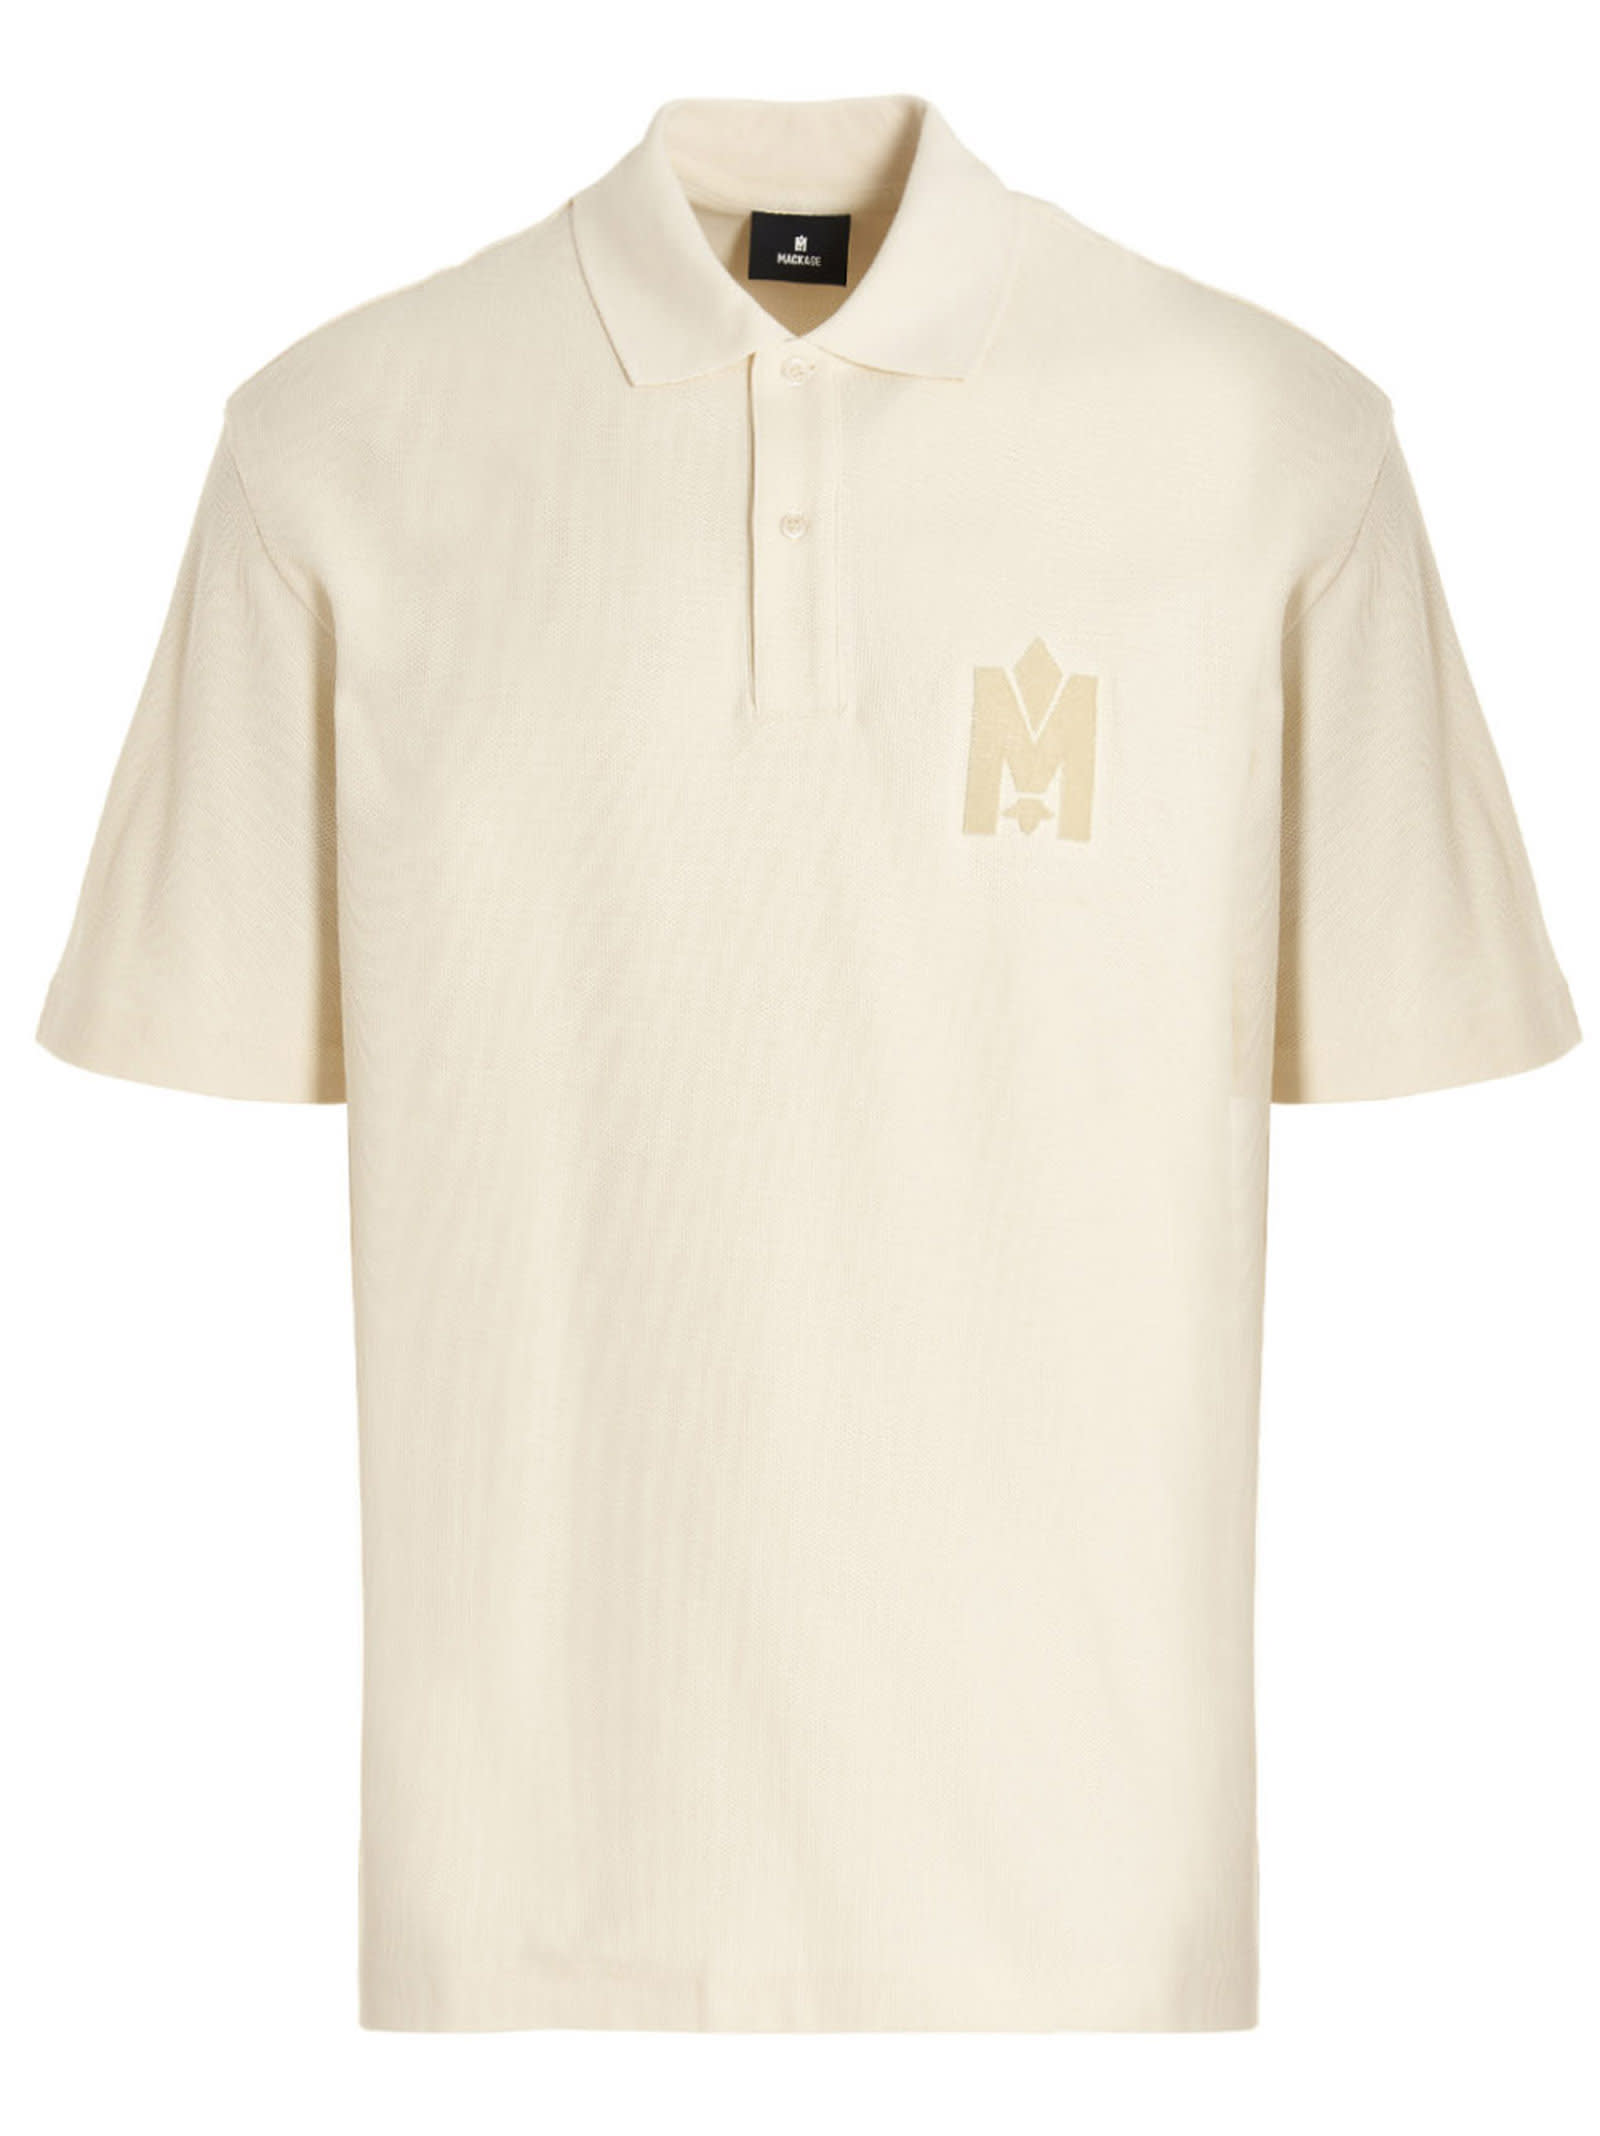 Mackage cayman Polo Shirt